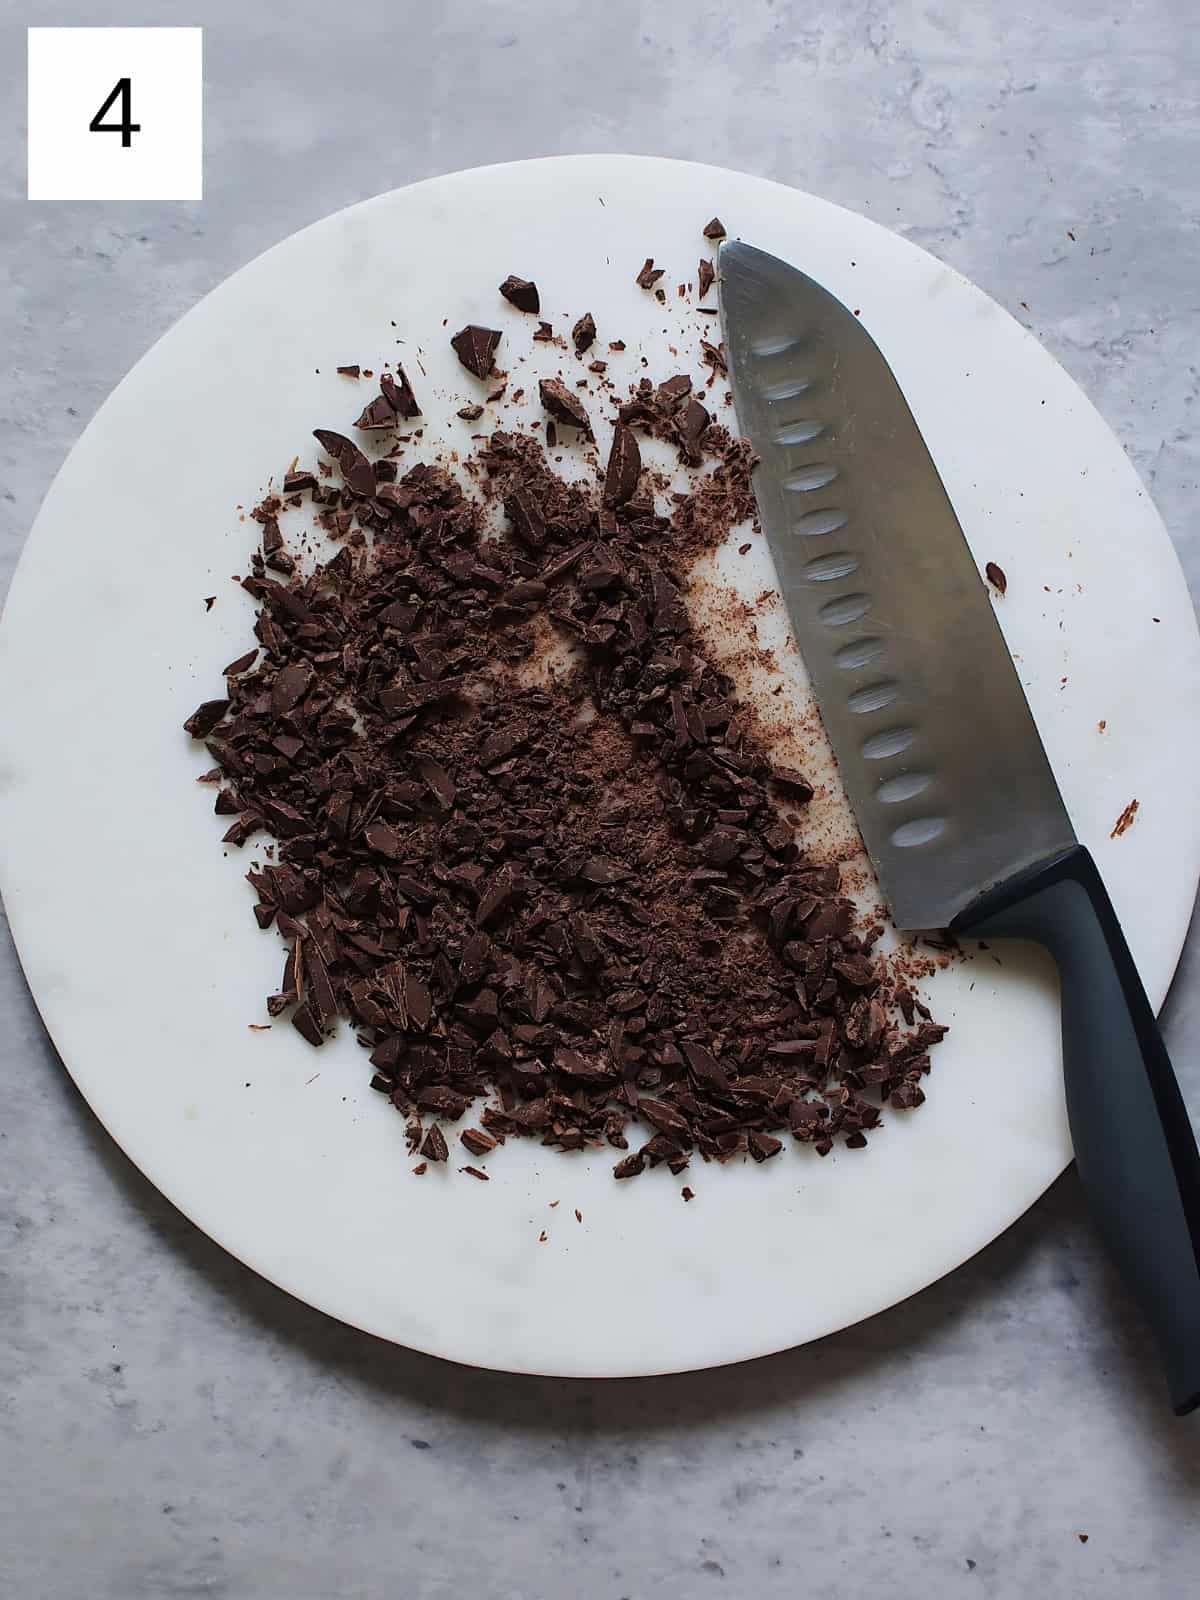 Minced chocolates on a plate next to a knife.